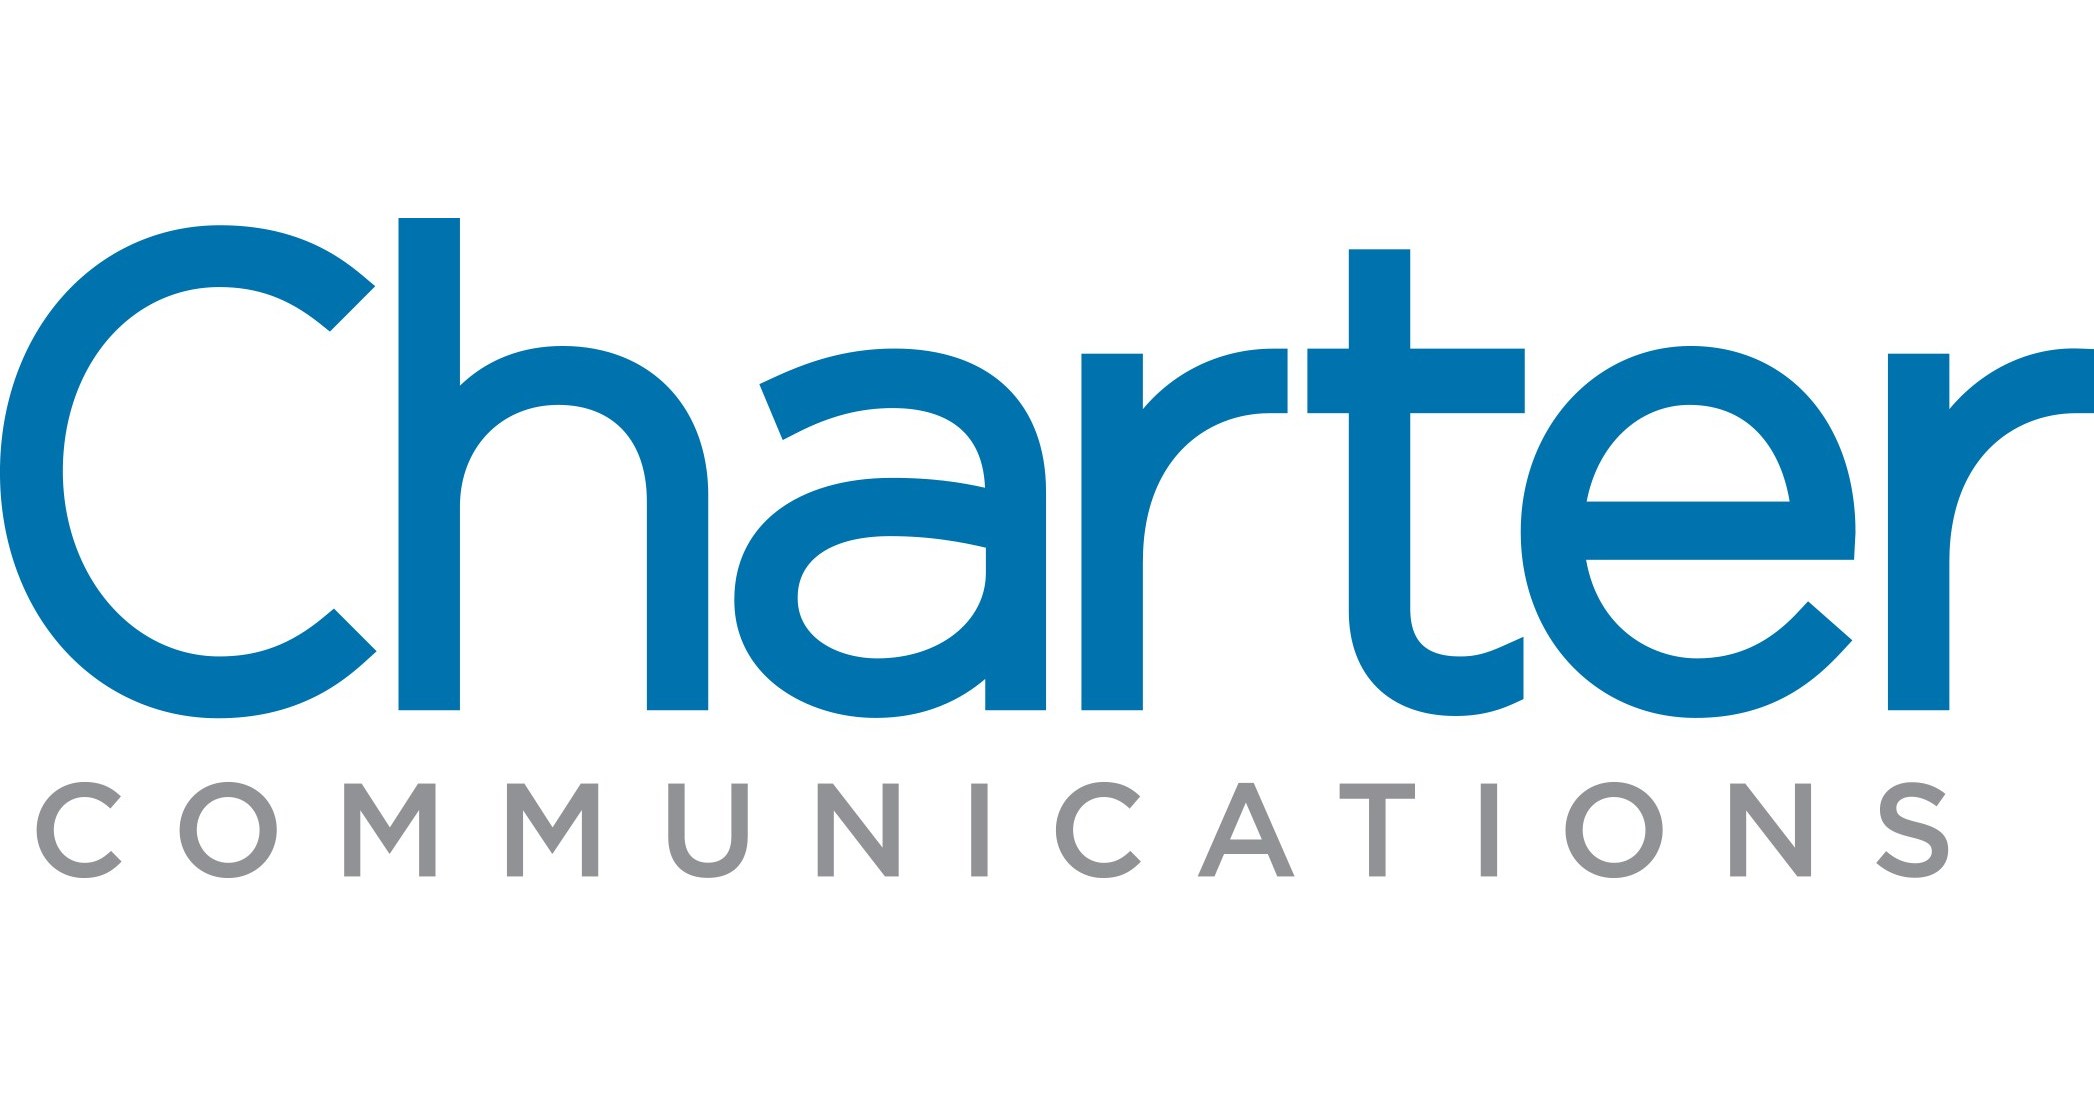 charter communications logo